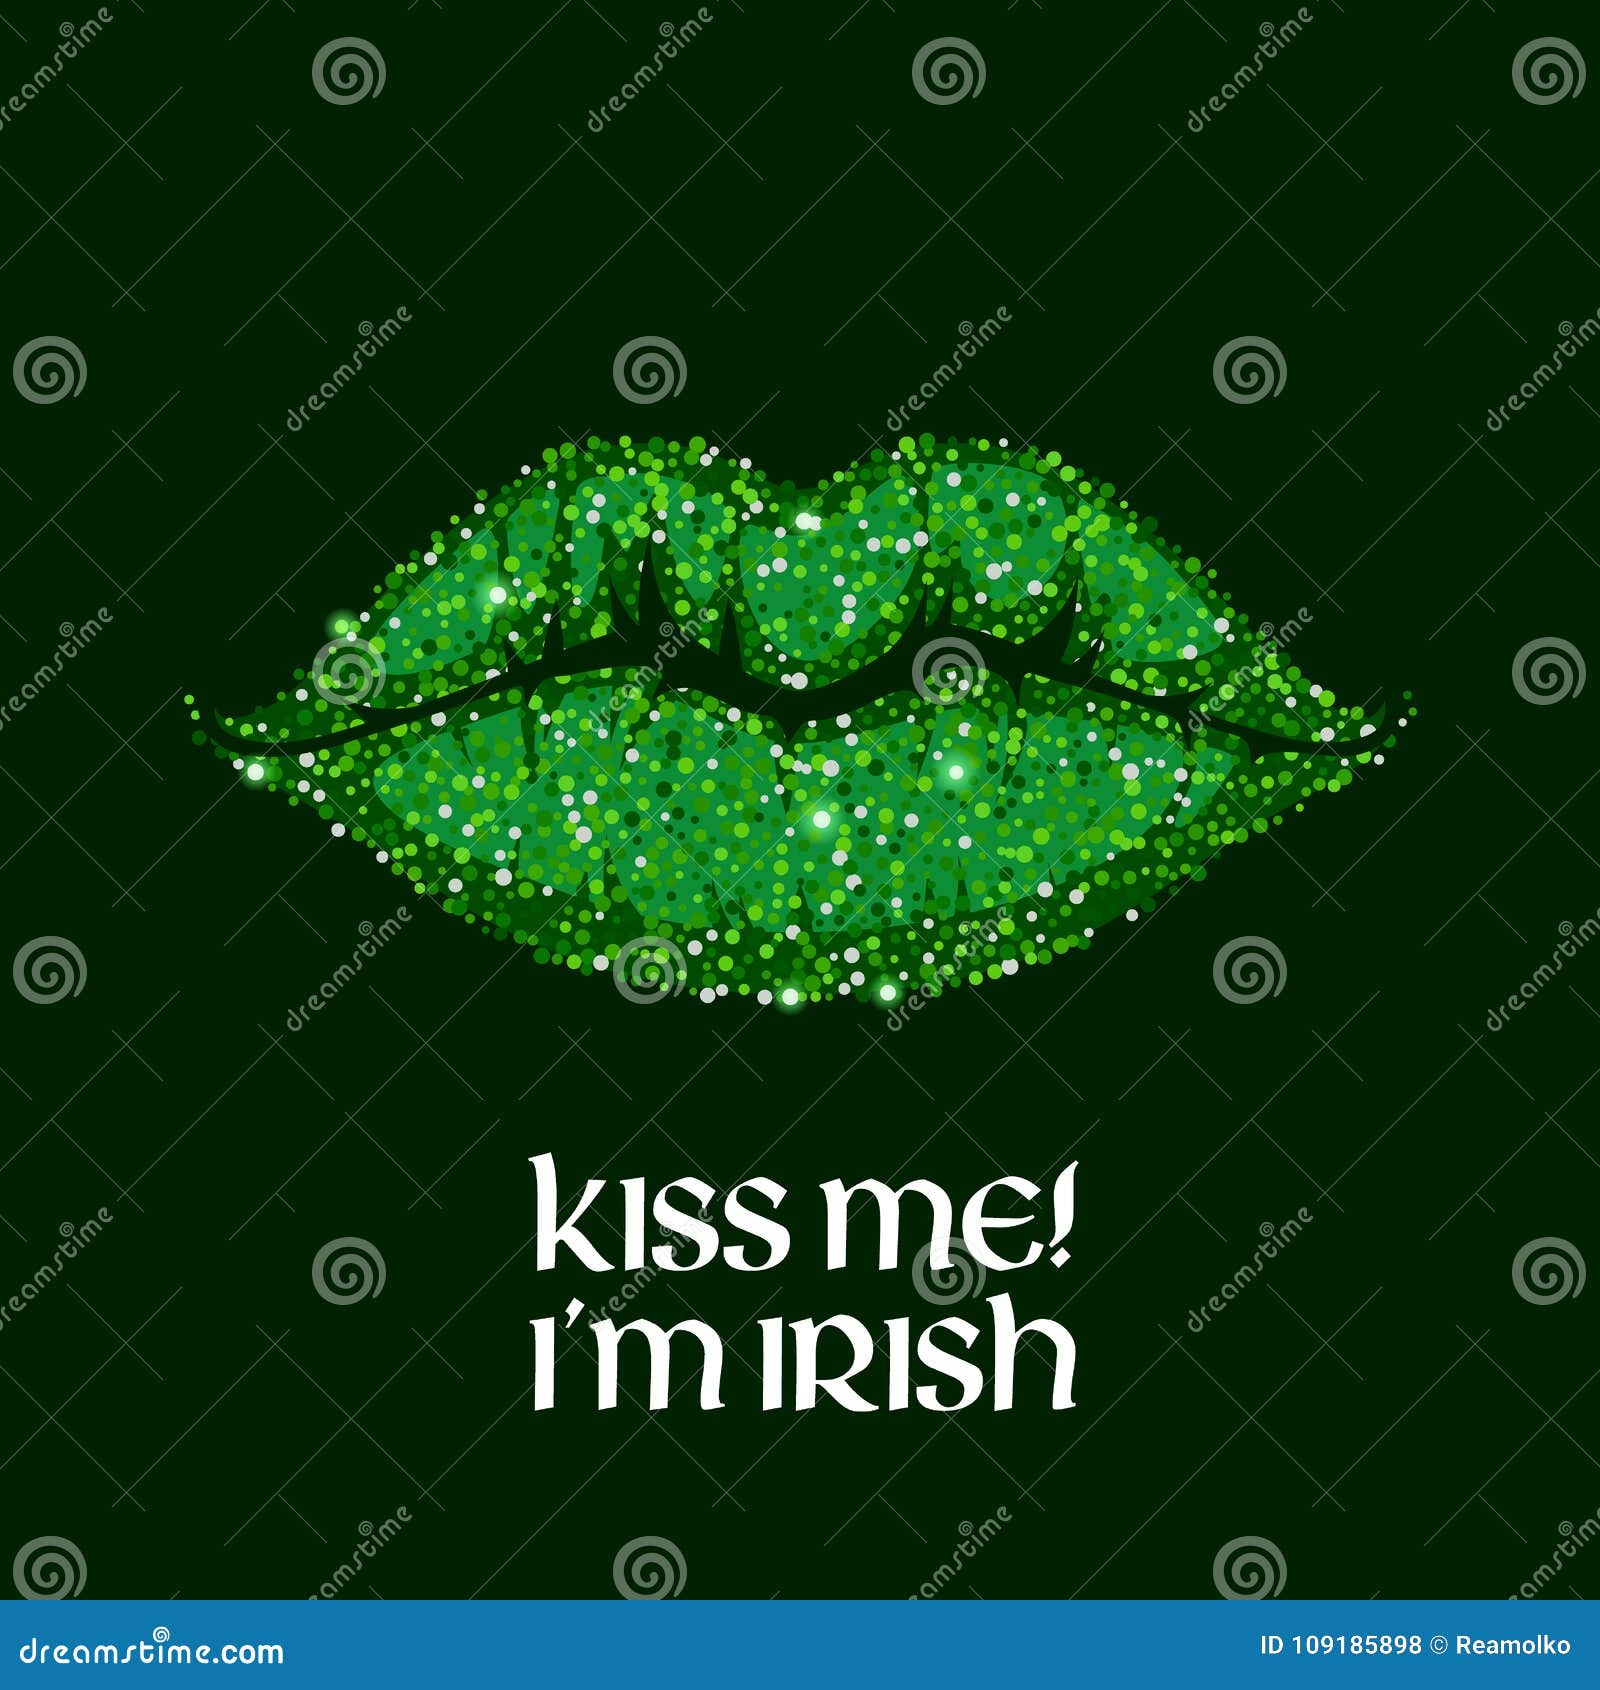 Graphic Tee Glitter I'm Drunk White or Black Kiss Me St Patrick's Day